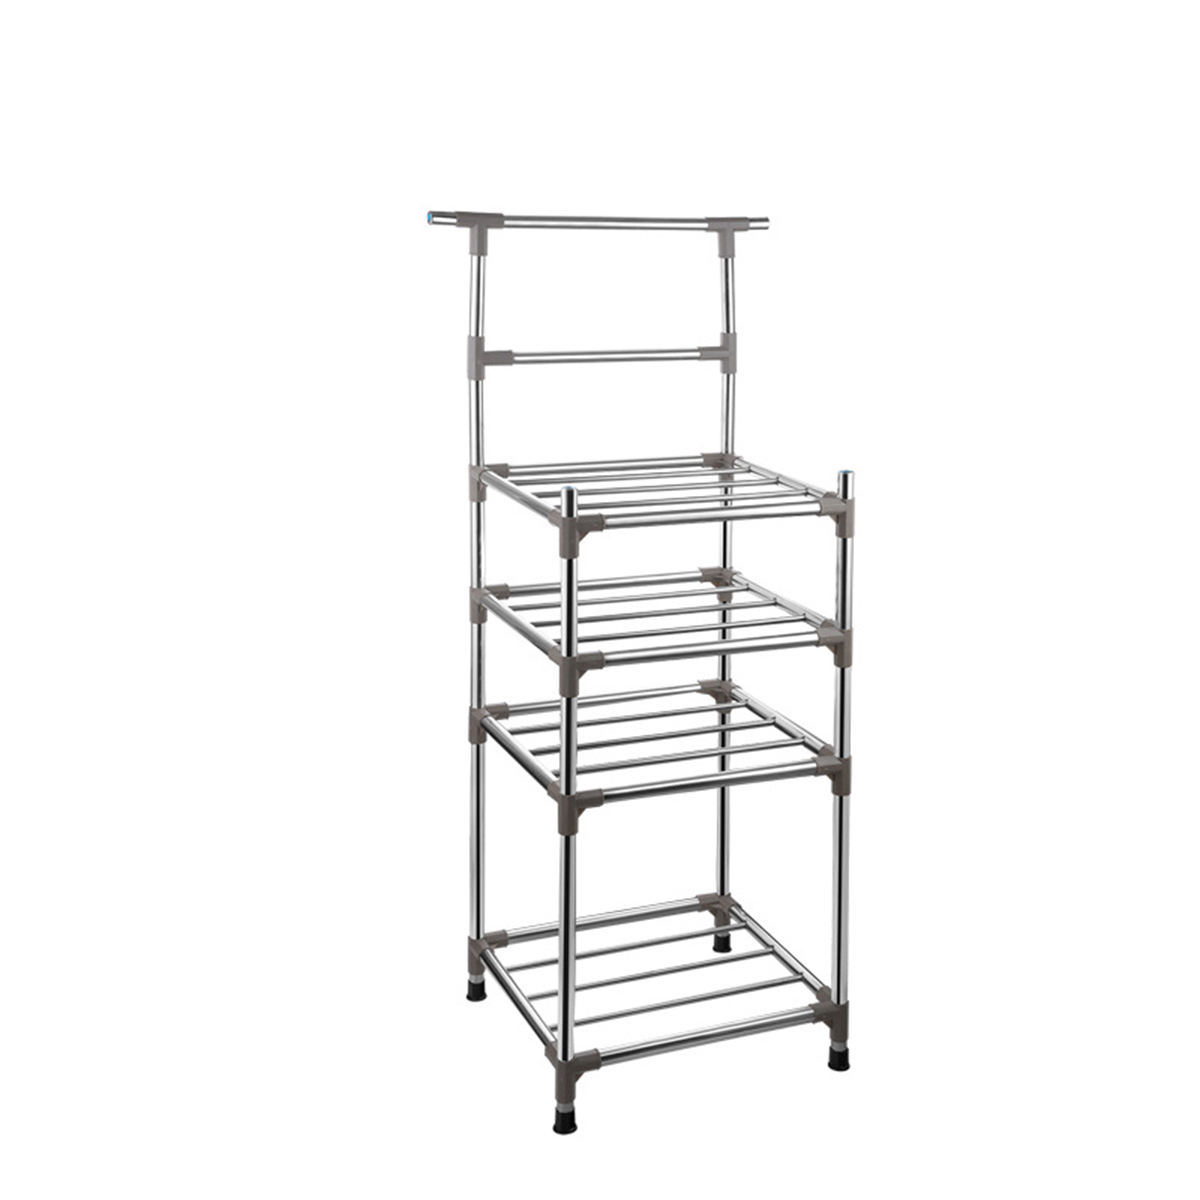 34-Layers-Free-standing-Stainless-Steel-Kitchen-Rack-Sheelf-Pot-Storage-Holder-1605396-3